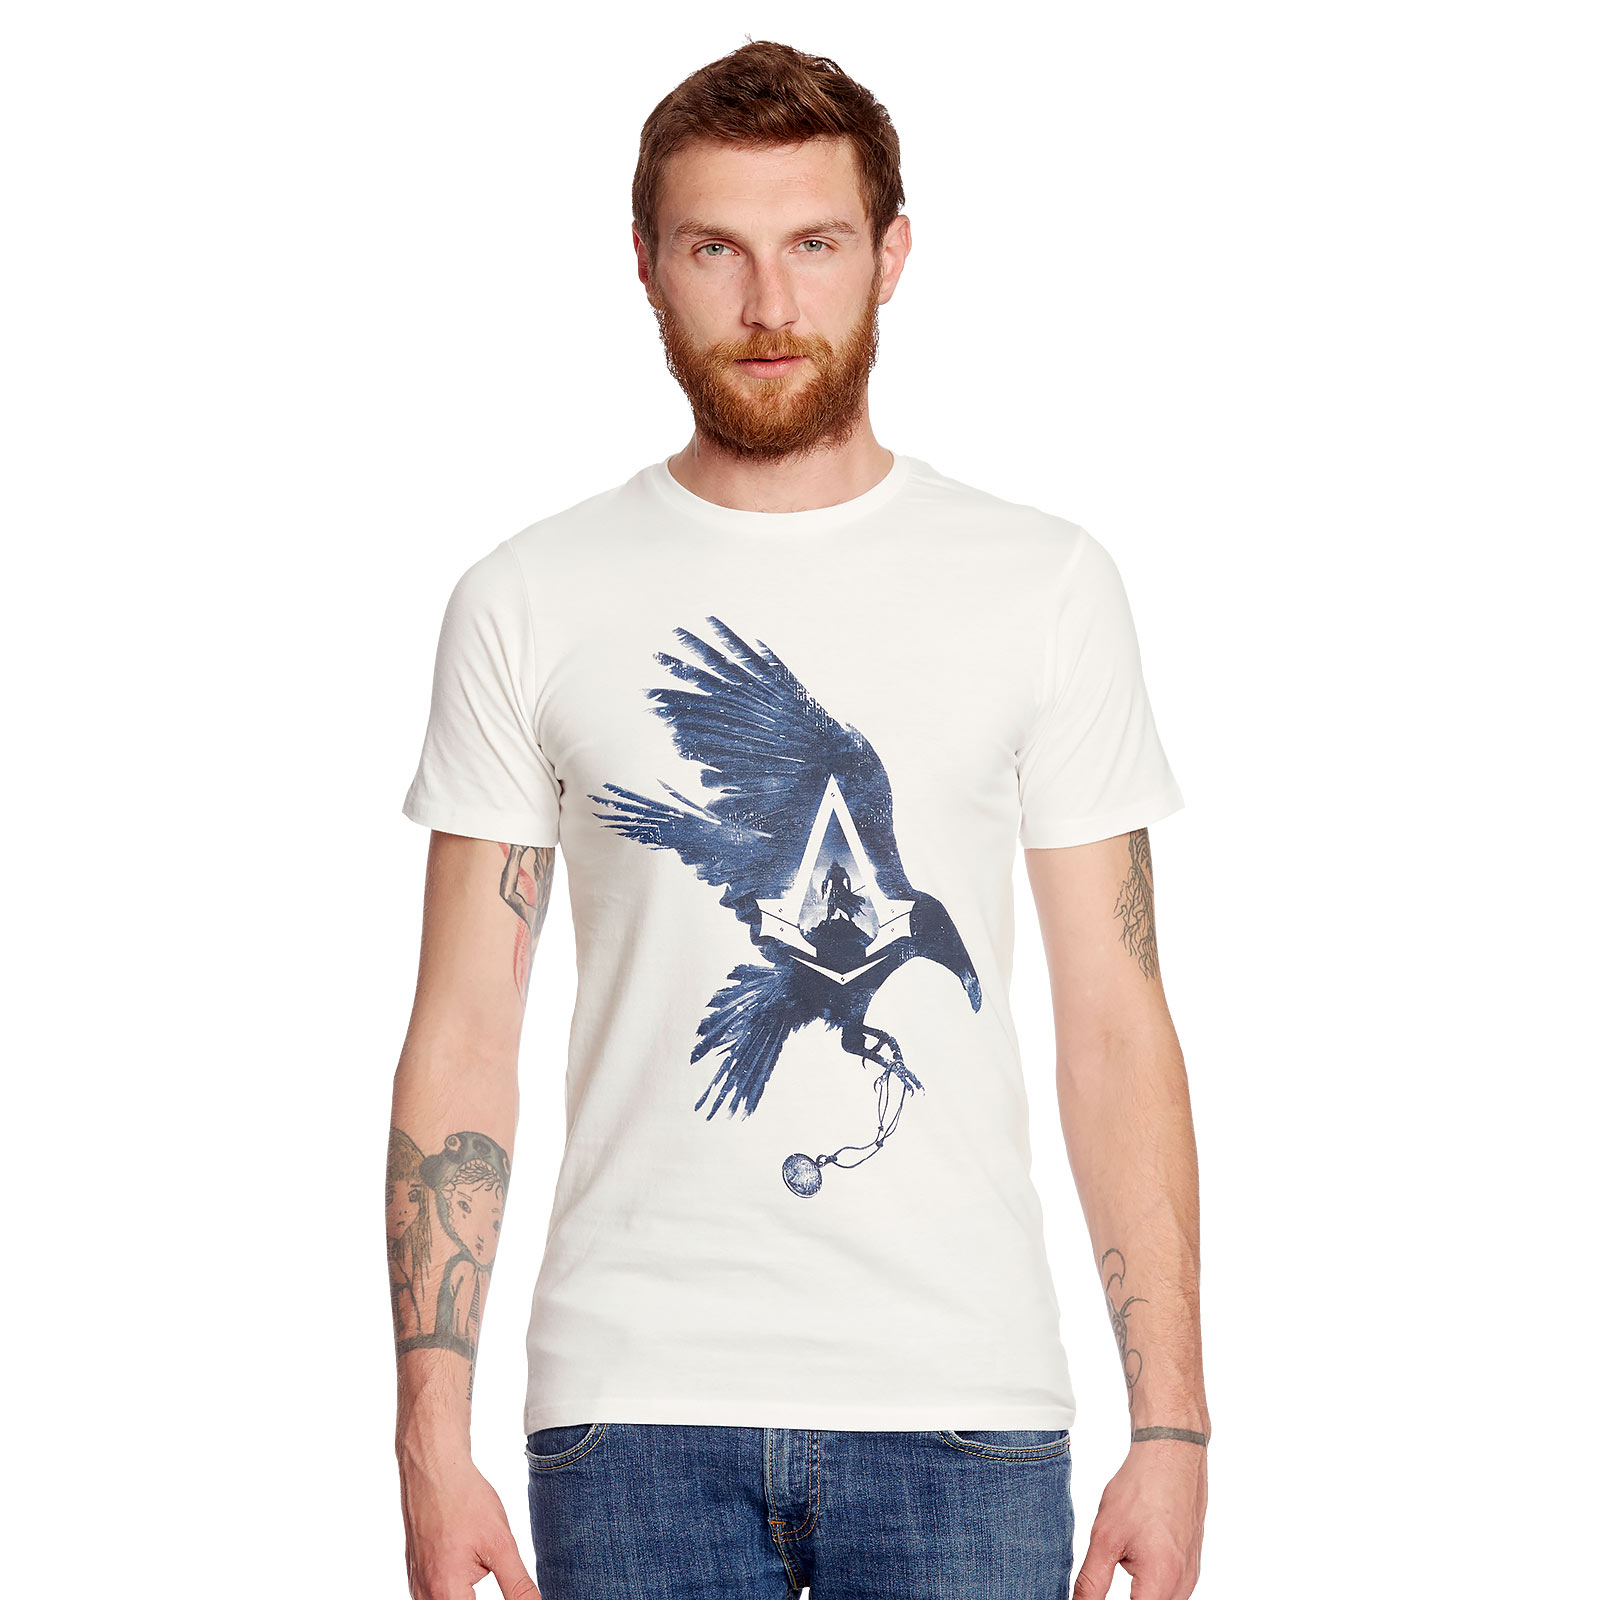 Assassins Creed - Jacob Frye Raven T-Shirt weiß